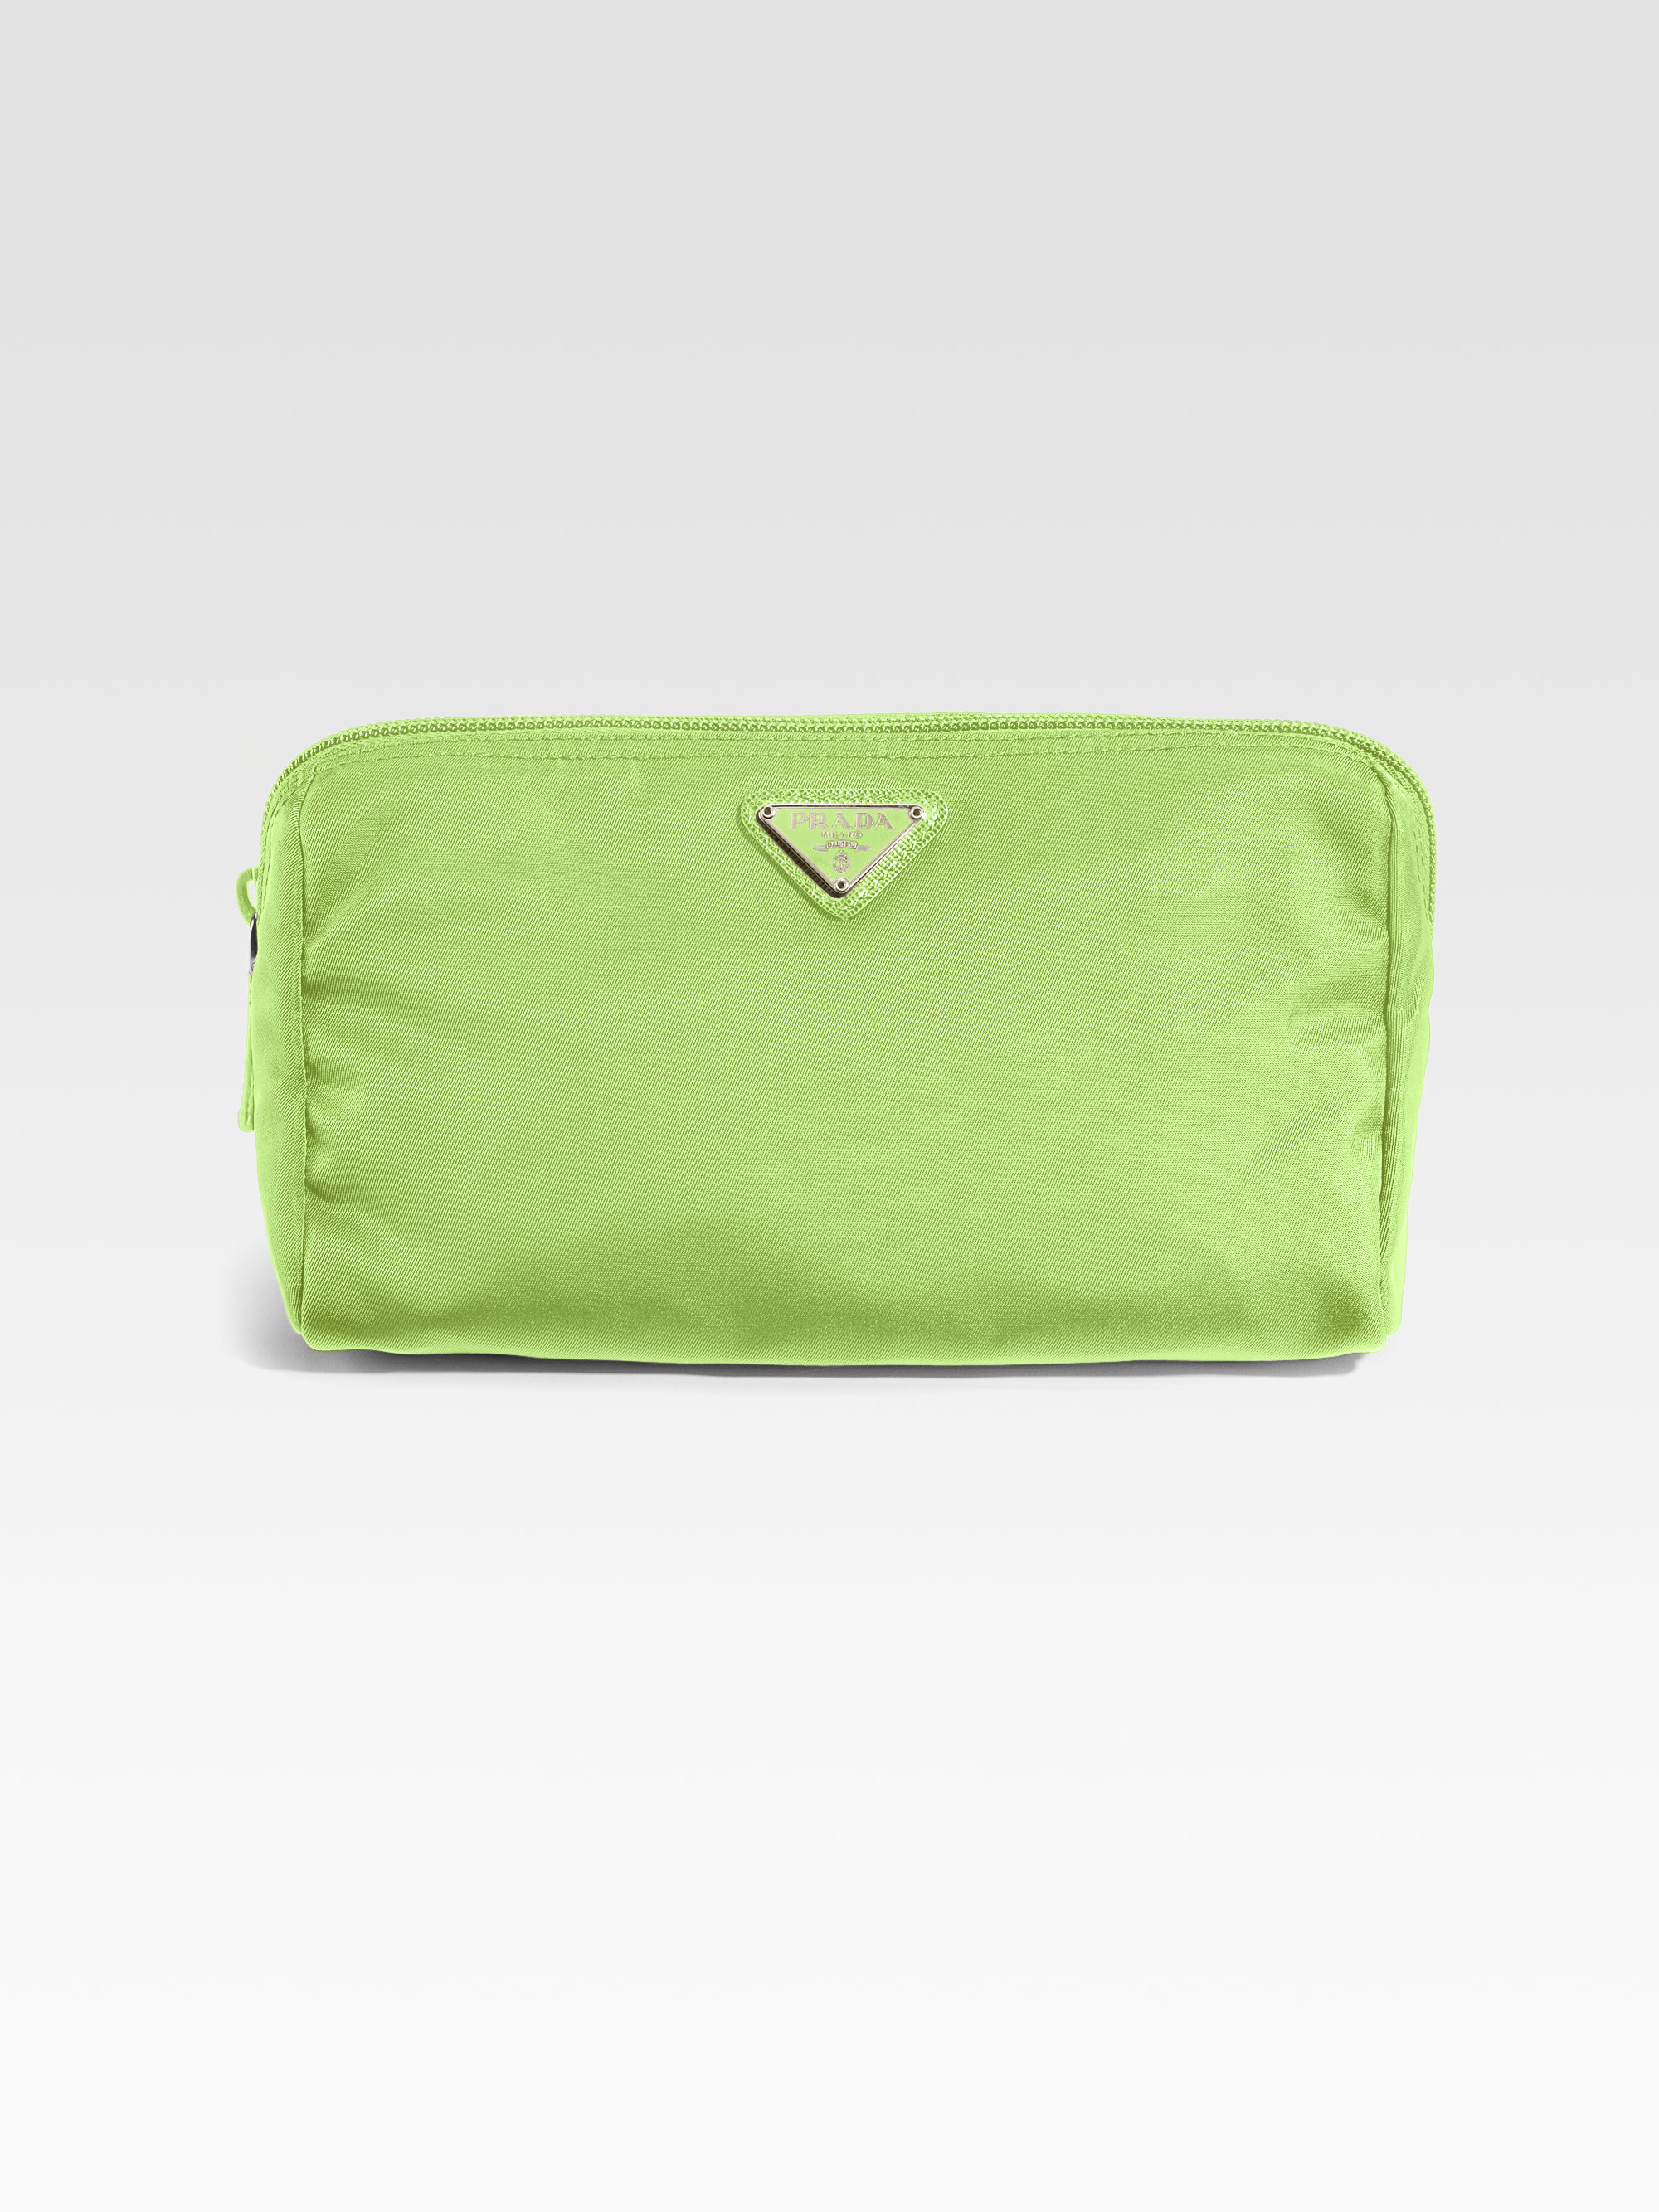 Prada Nylon Triangle Cosmetic Bag in Green | Lyst